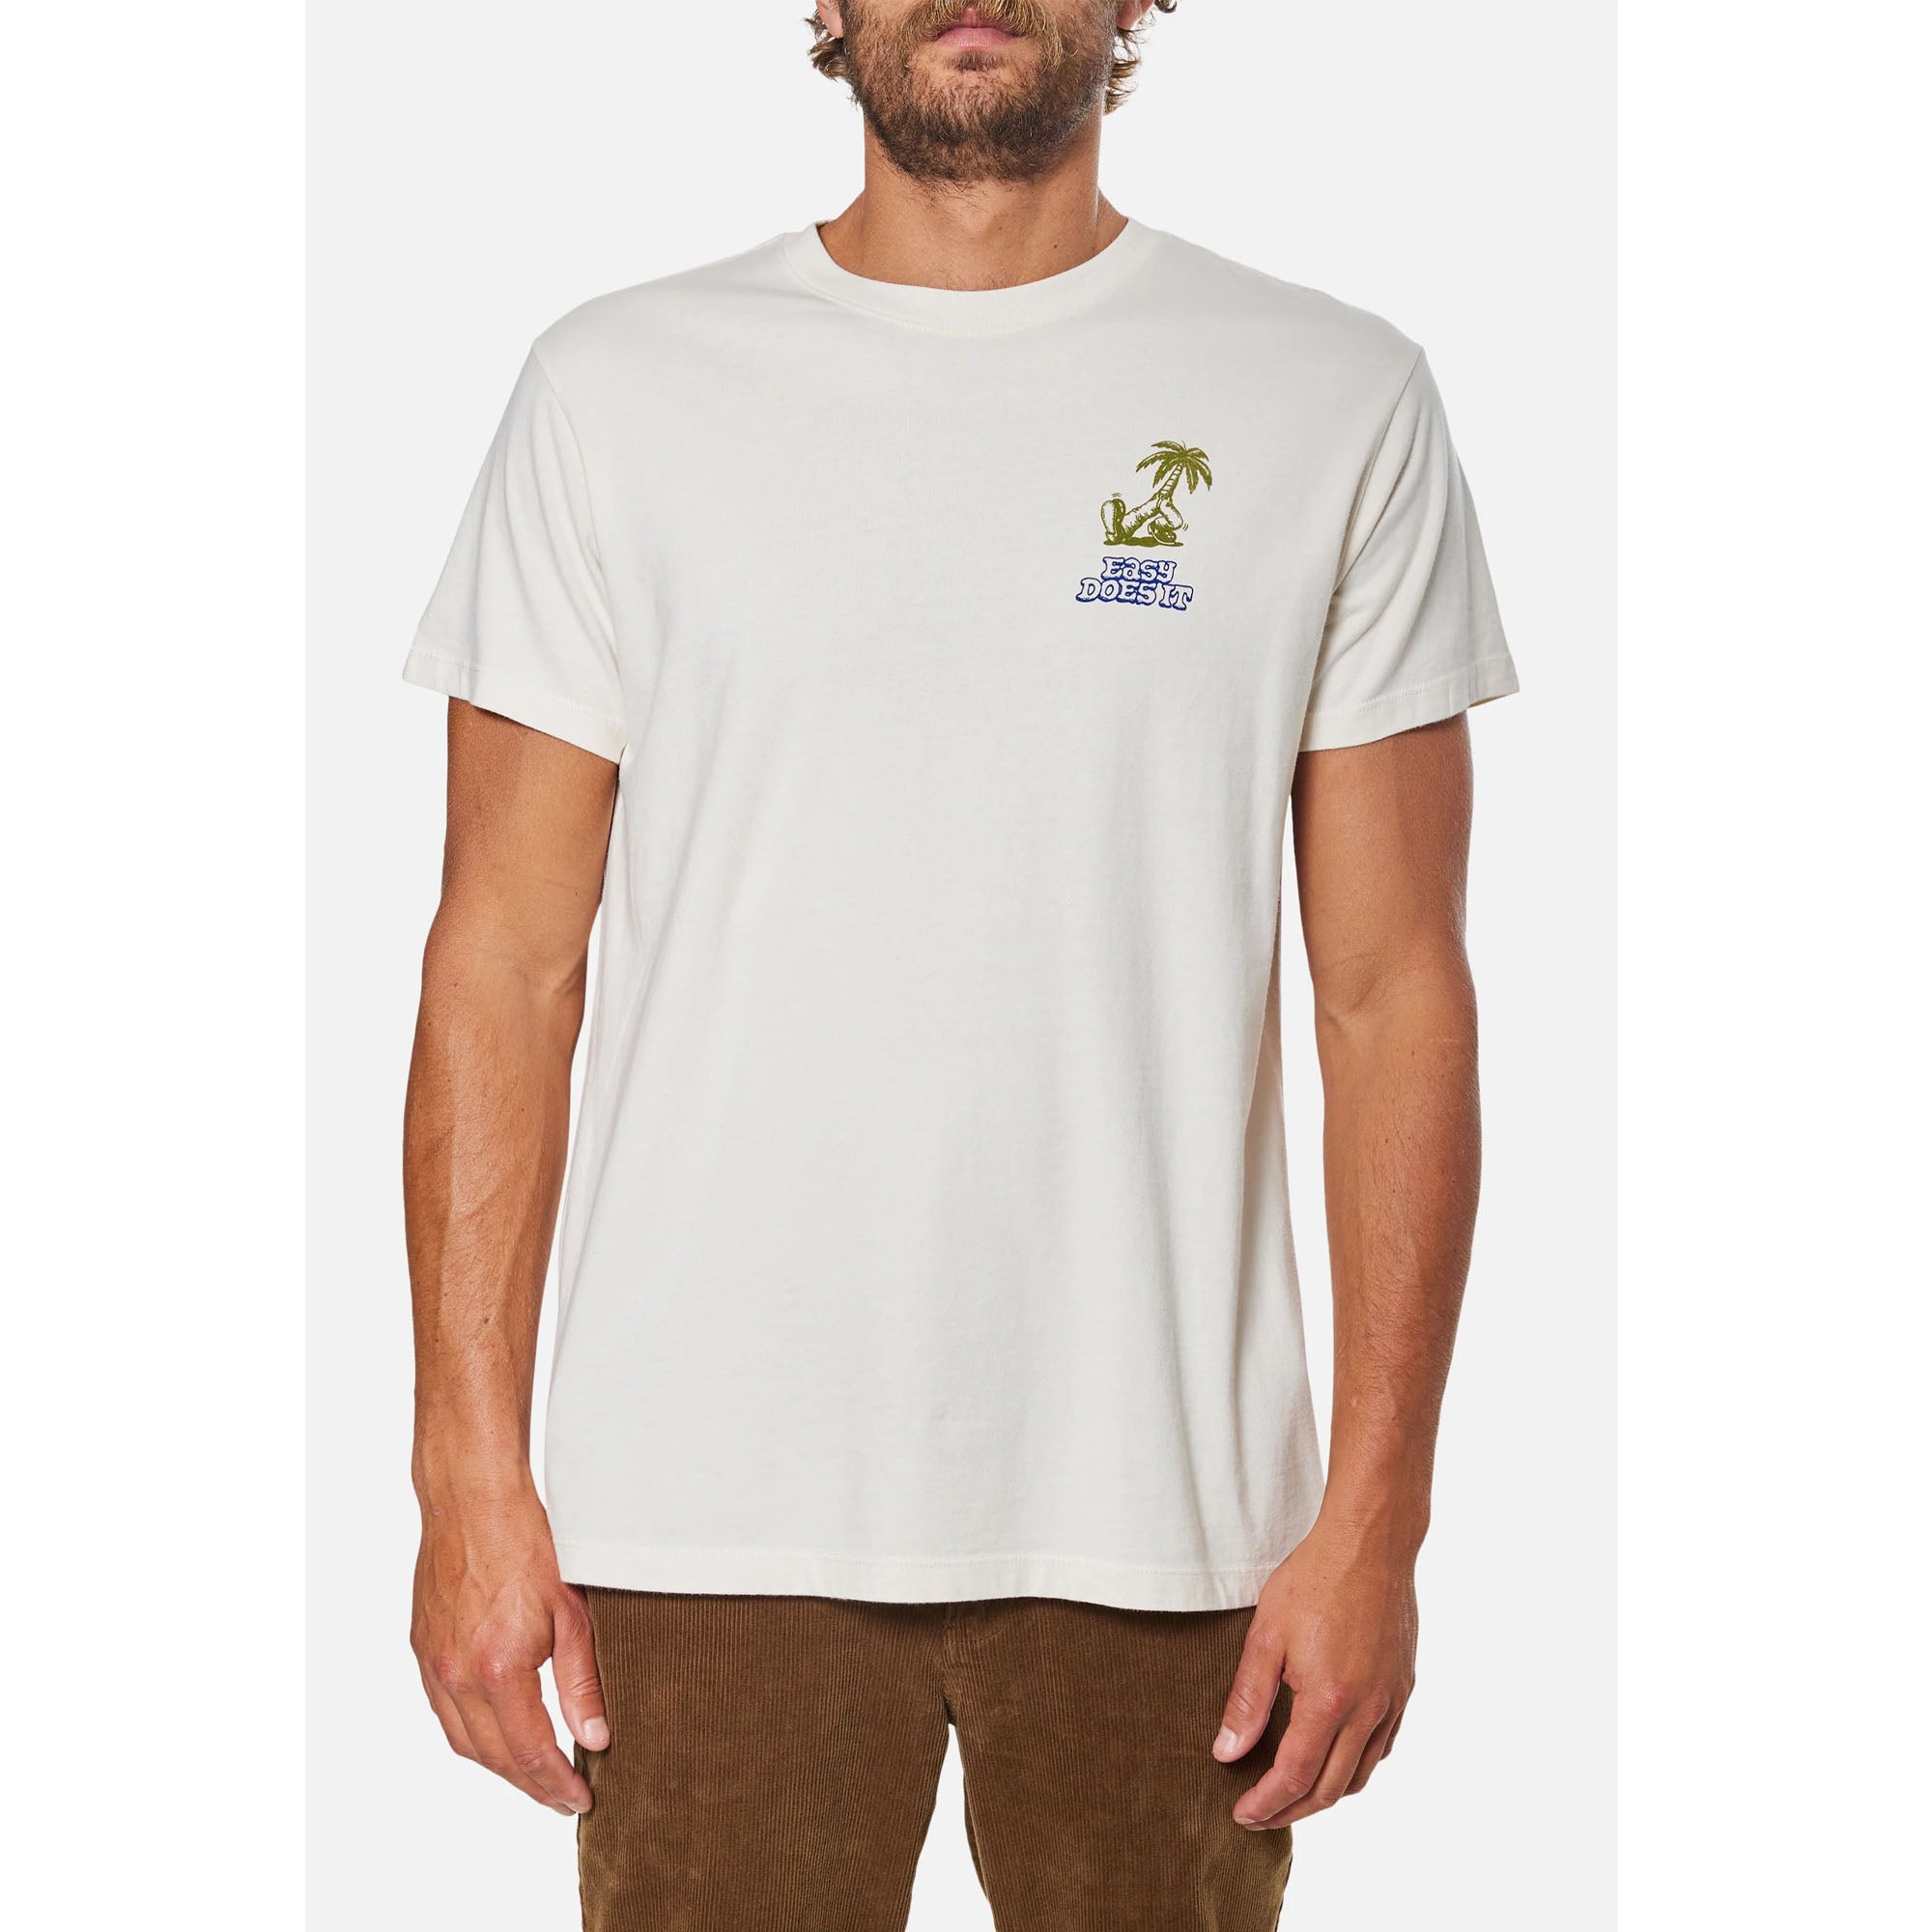 Katin Stroll Men's S/S T-Shirt